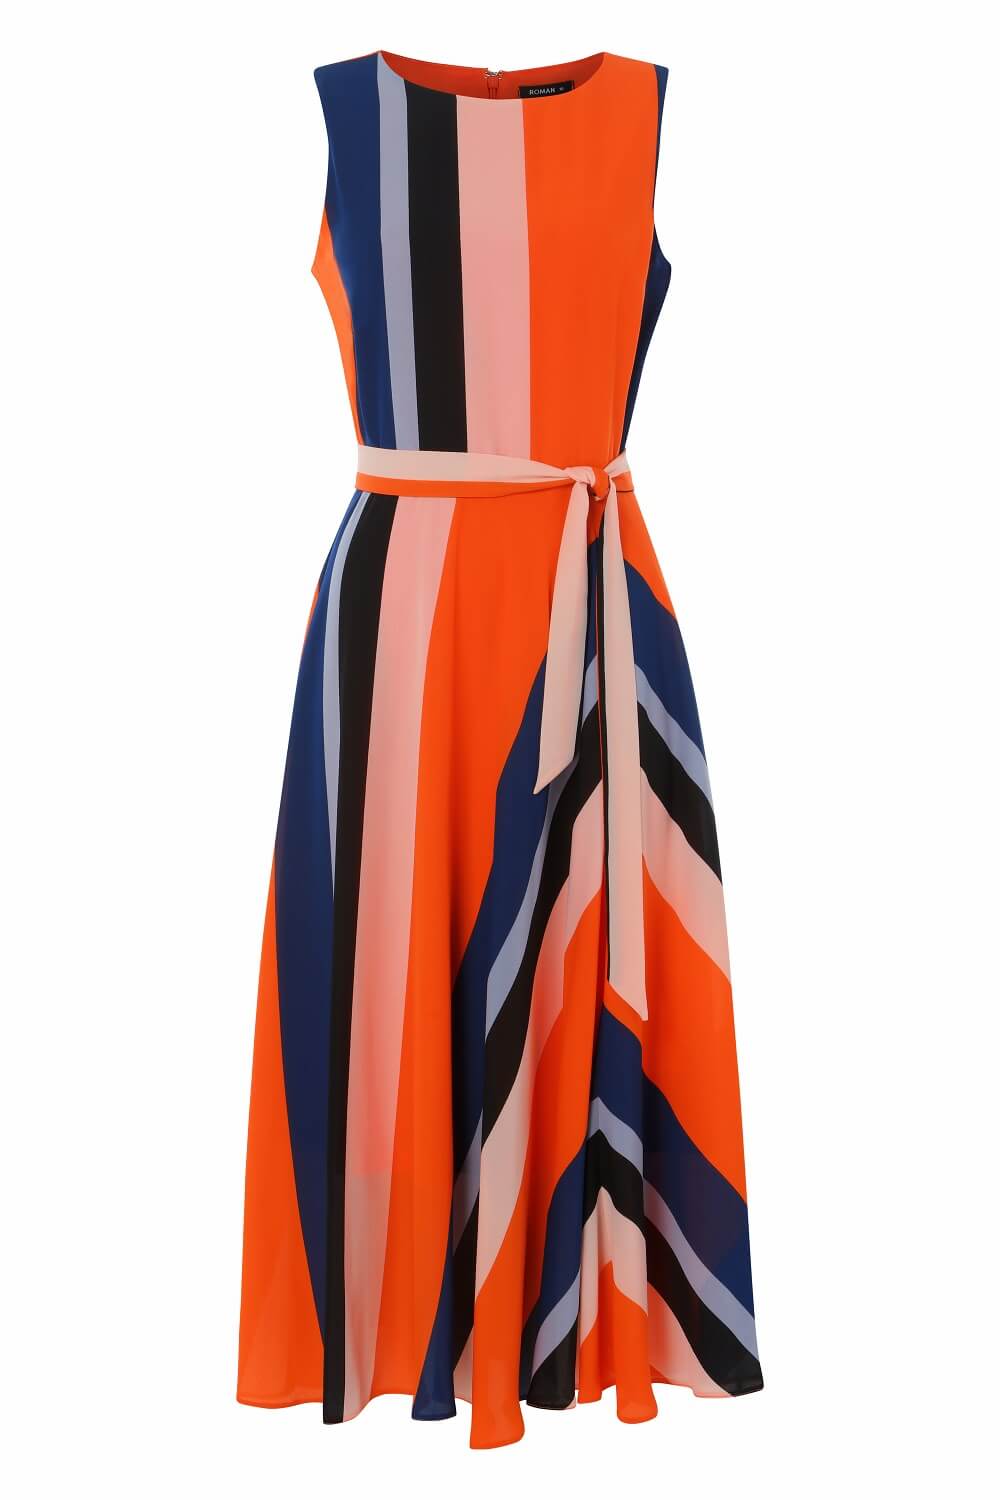 ORANGE Pleated Stripe Fit and Flare Midi Dress, Image 5 of 5